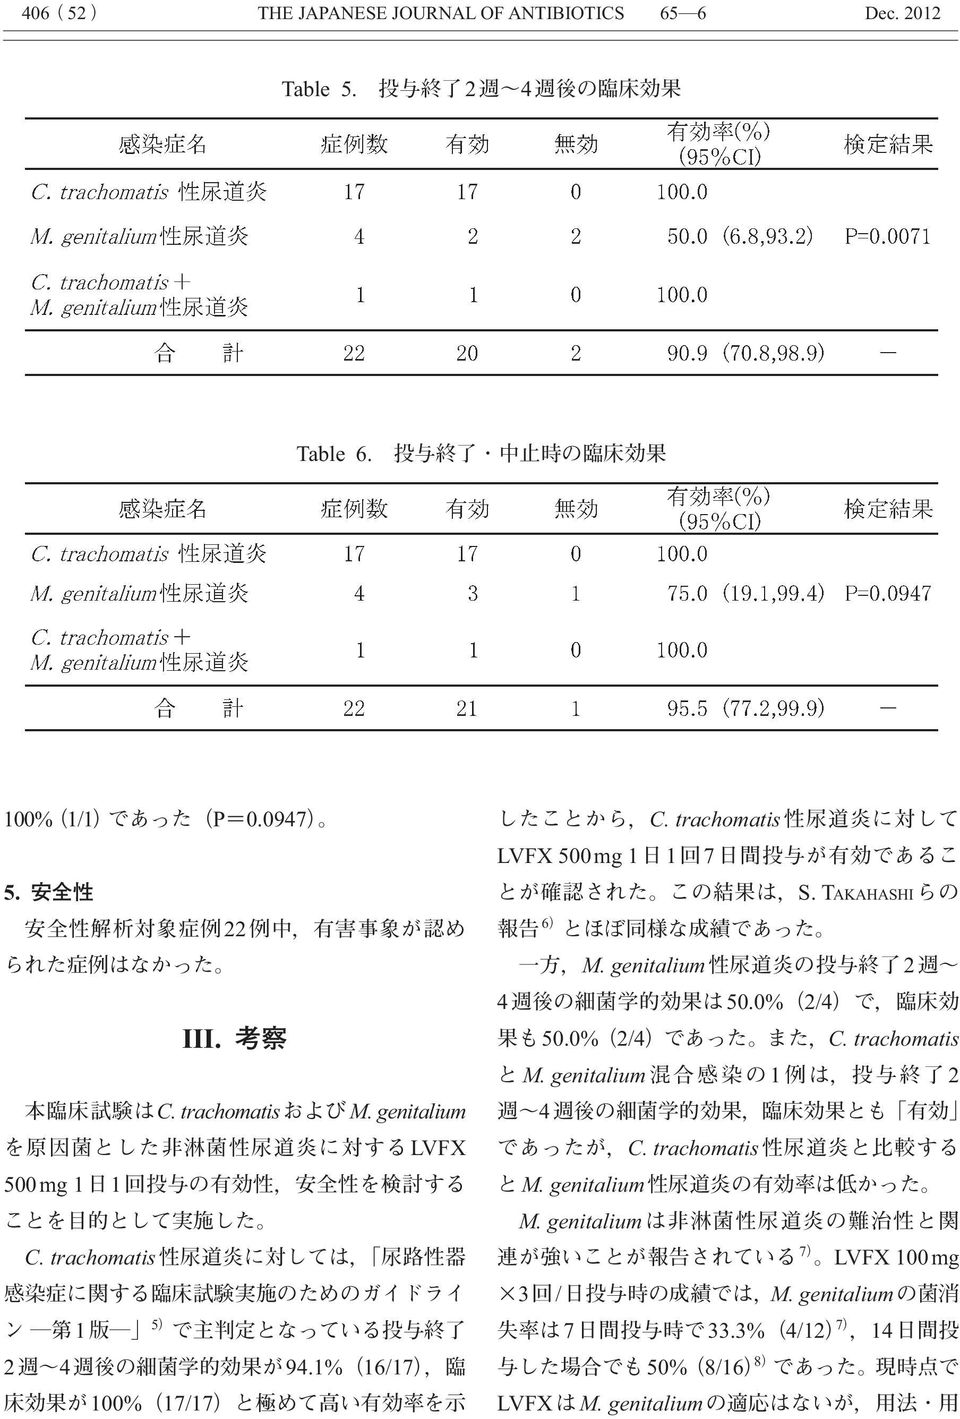 trachomatis LVFX 500 mg 1 1 7 S. TAKAHASHI 6 M. genitalium 2 4 50.0% 2/4 50.0% 2/4 C. trachomatis M.